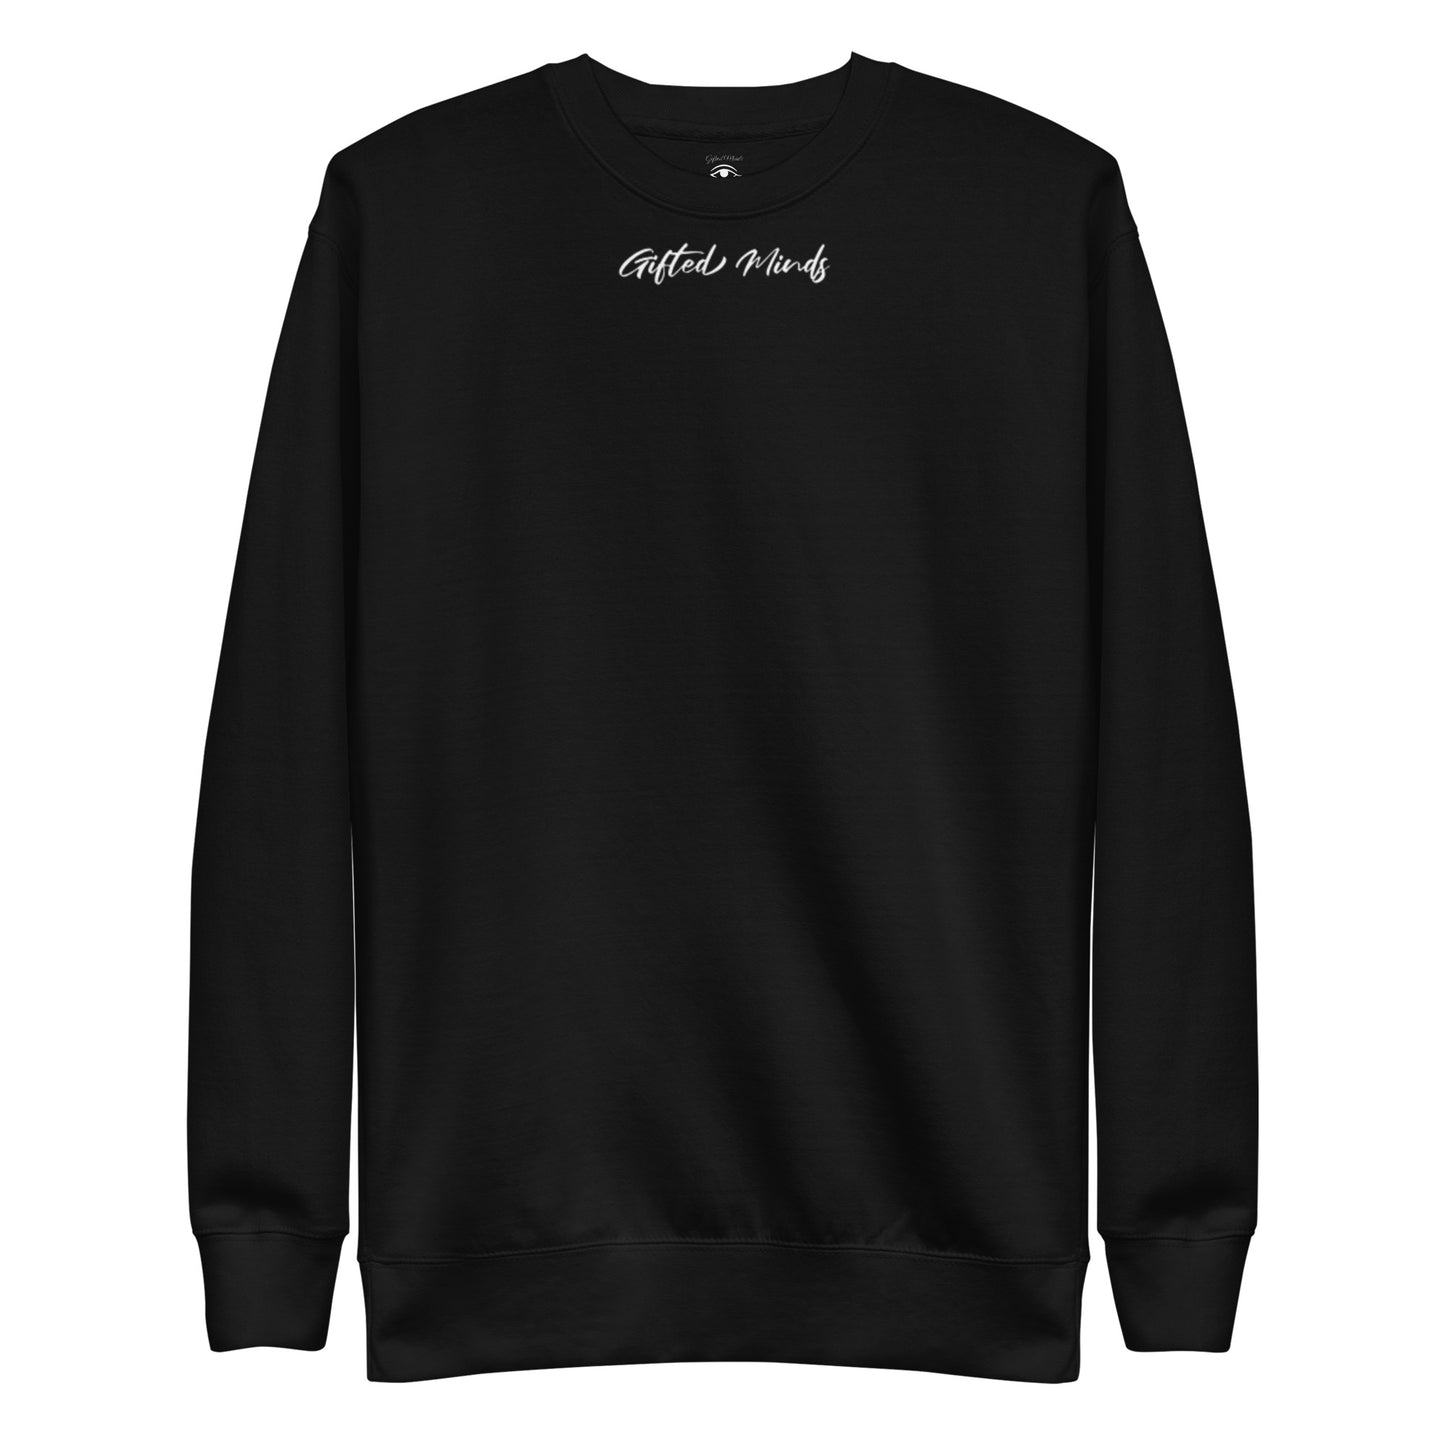 Gifted Minds Premium Sweatshirt - GFTD MNDS